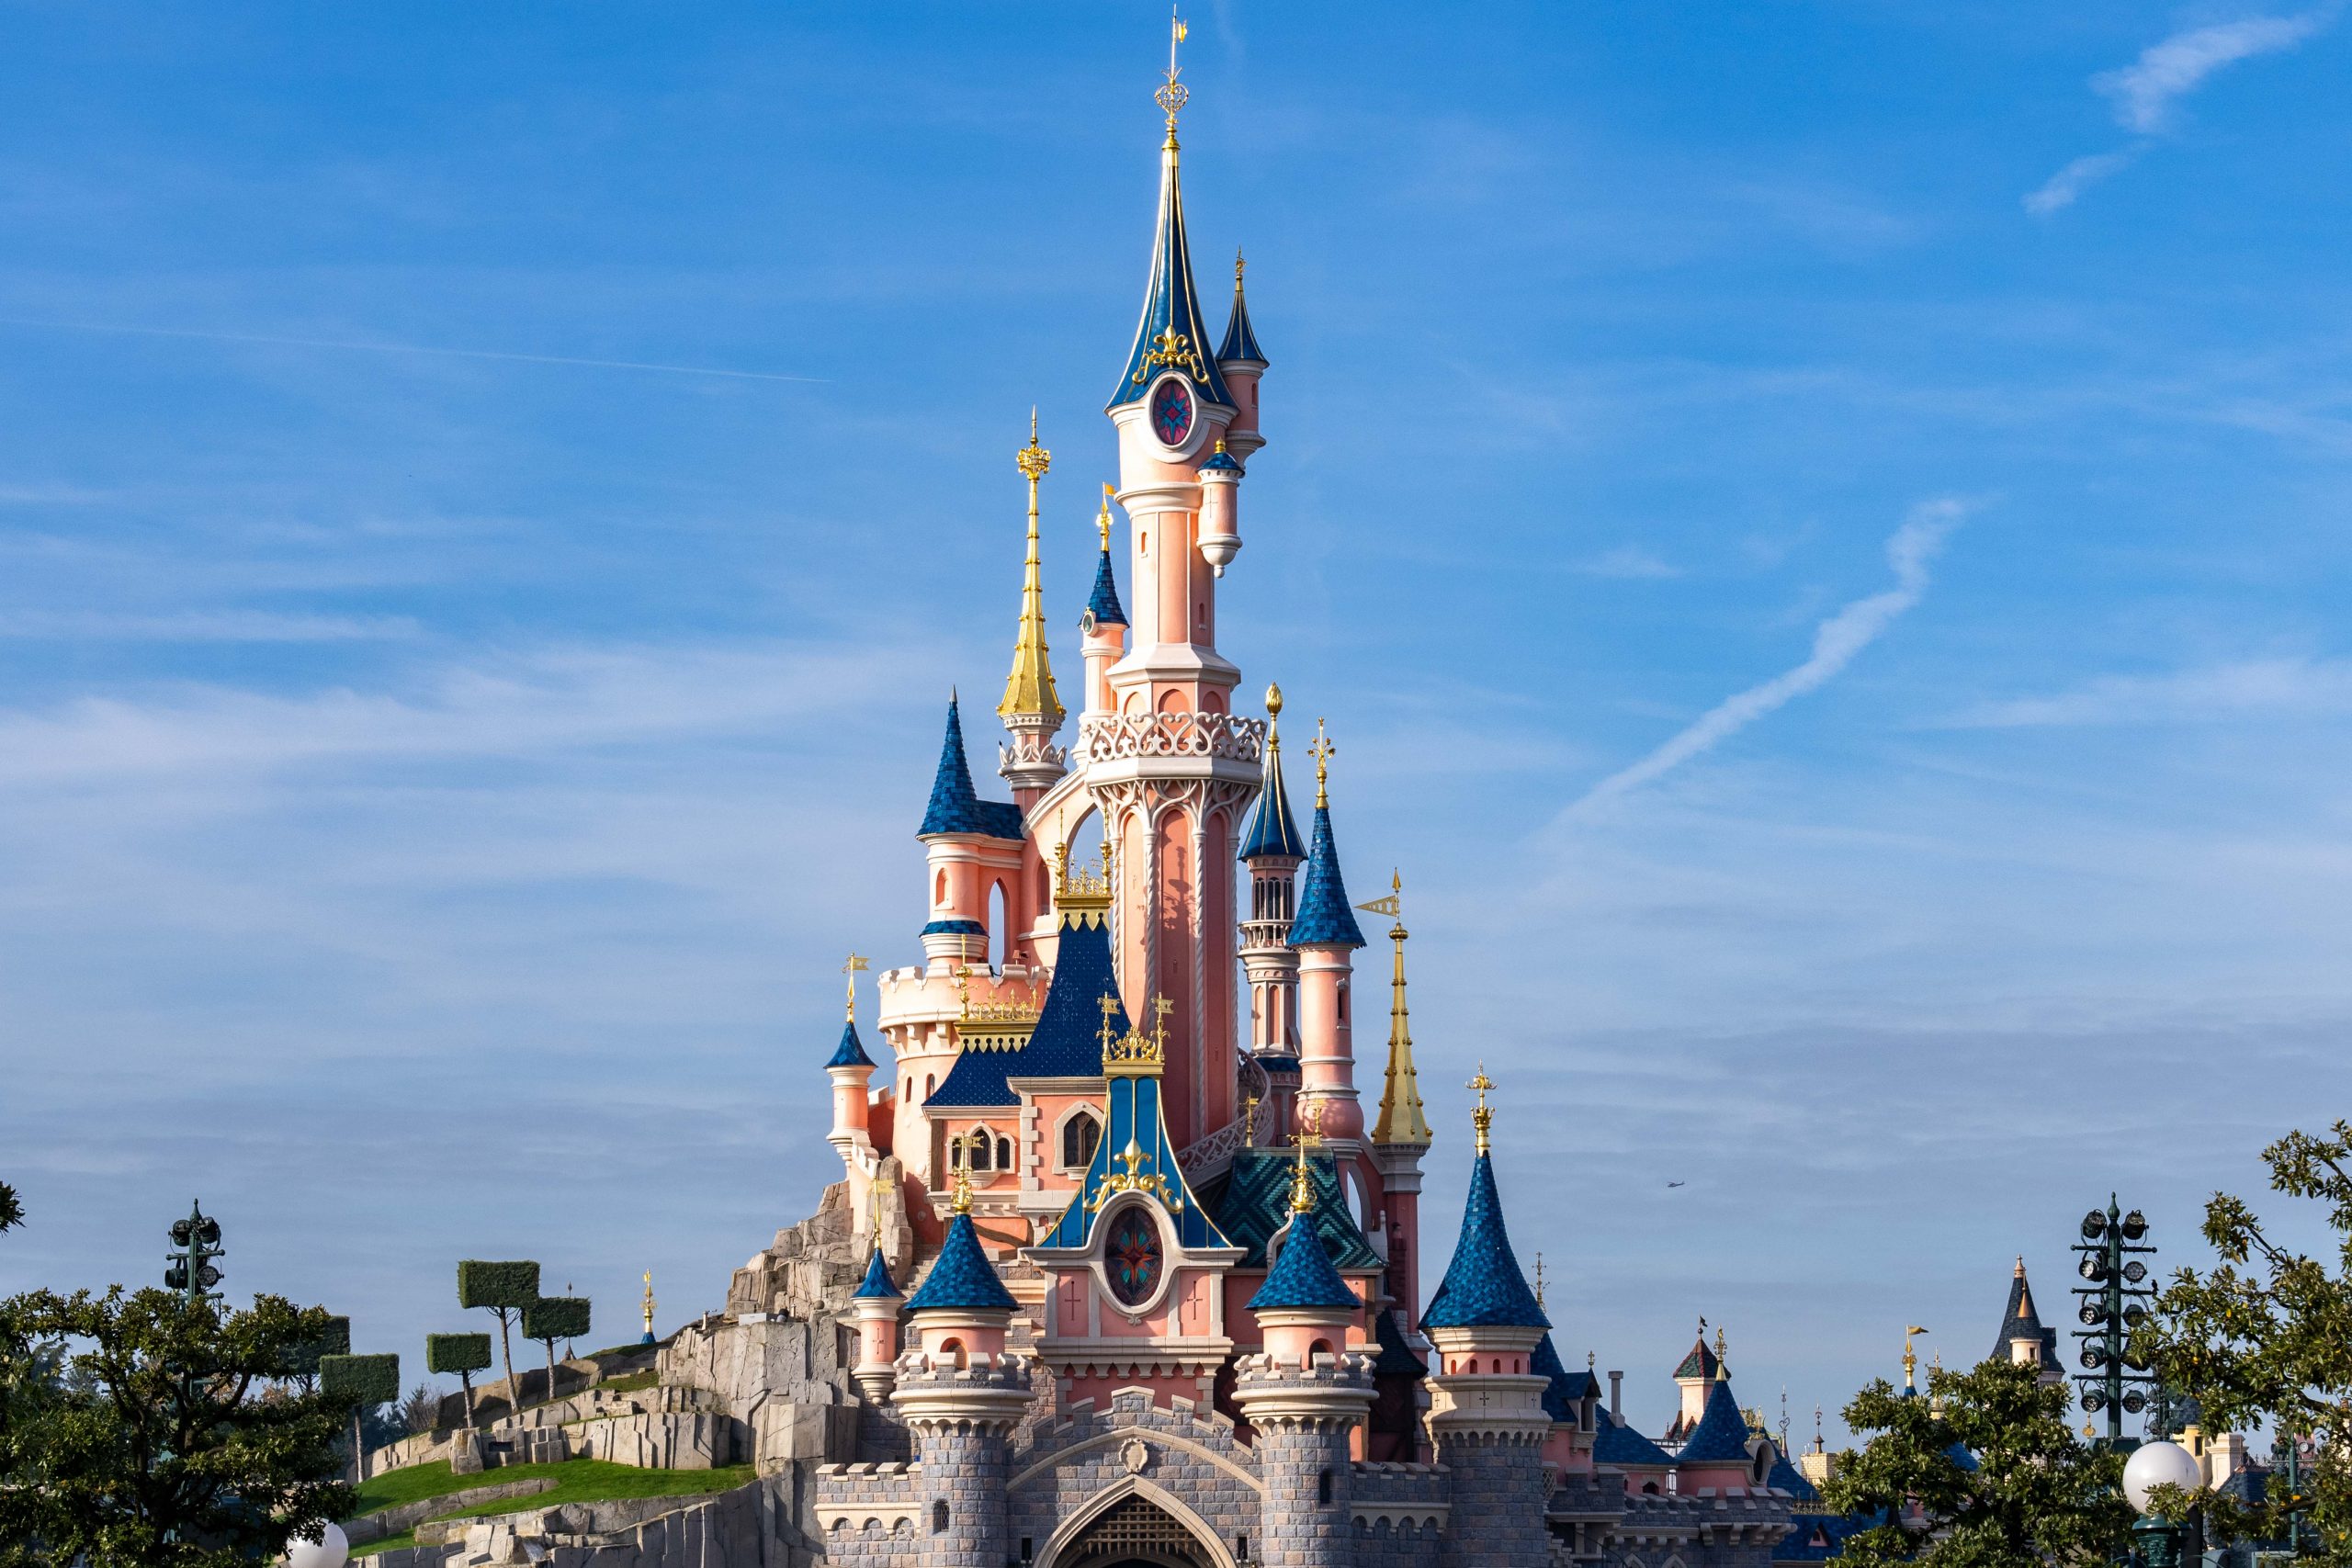 New Details On Disneyland Paris' Sleeping Beauty Castle Renovation